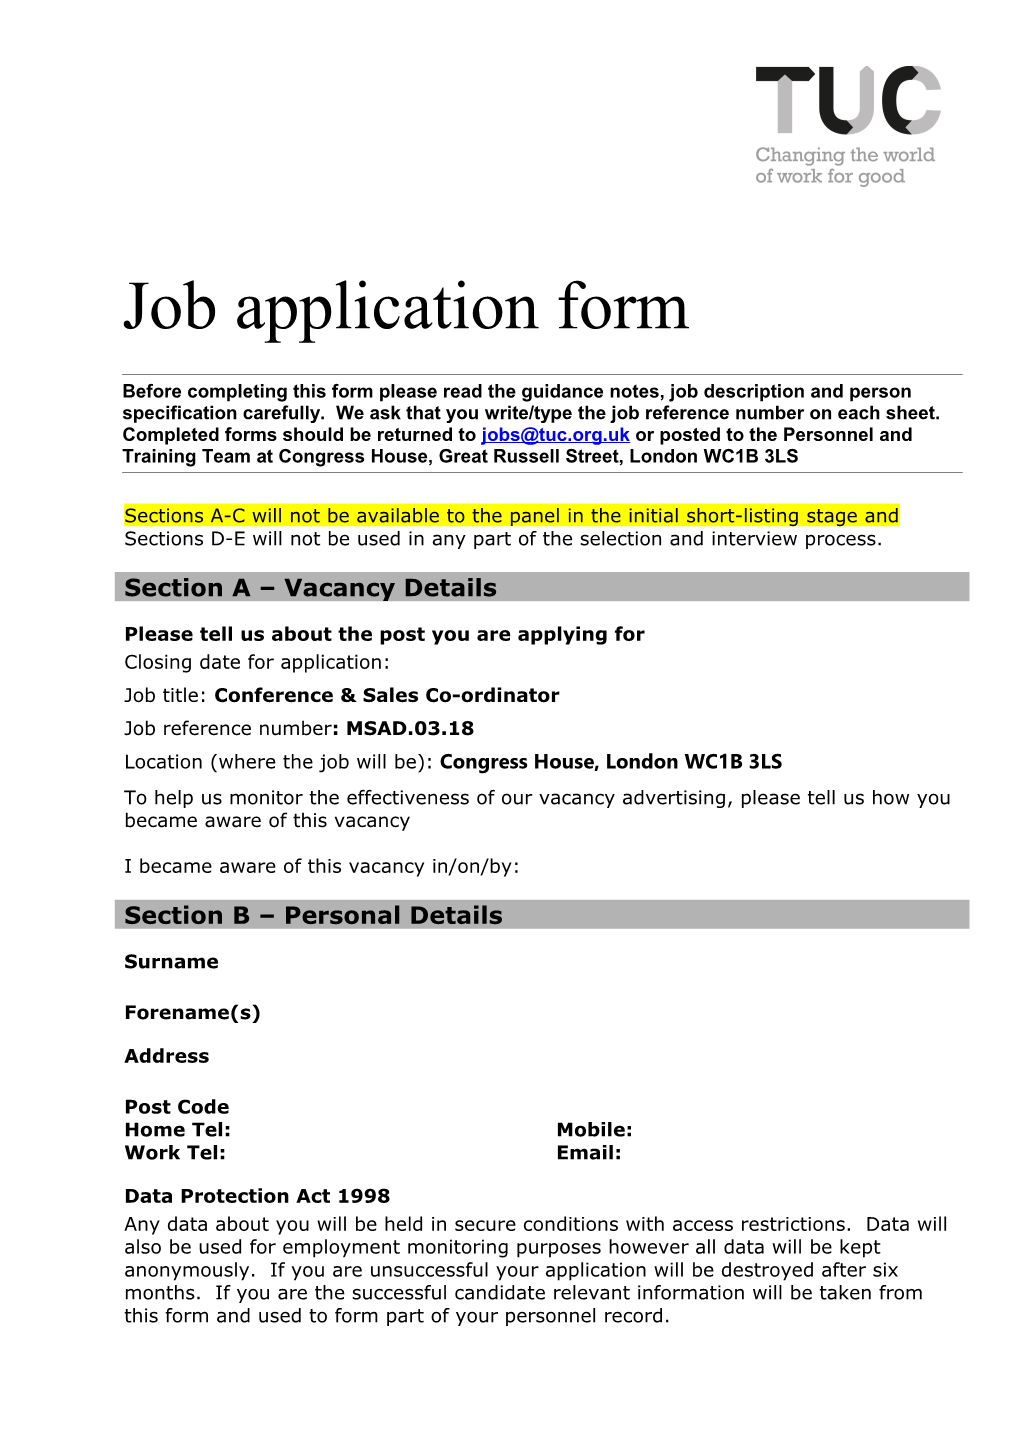 Job Application Form Job Reference No